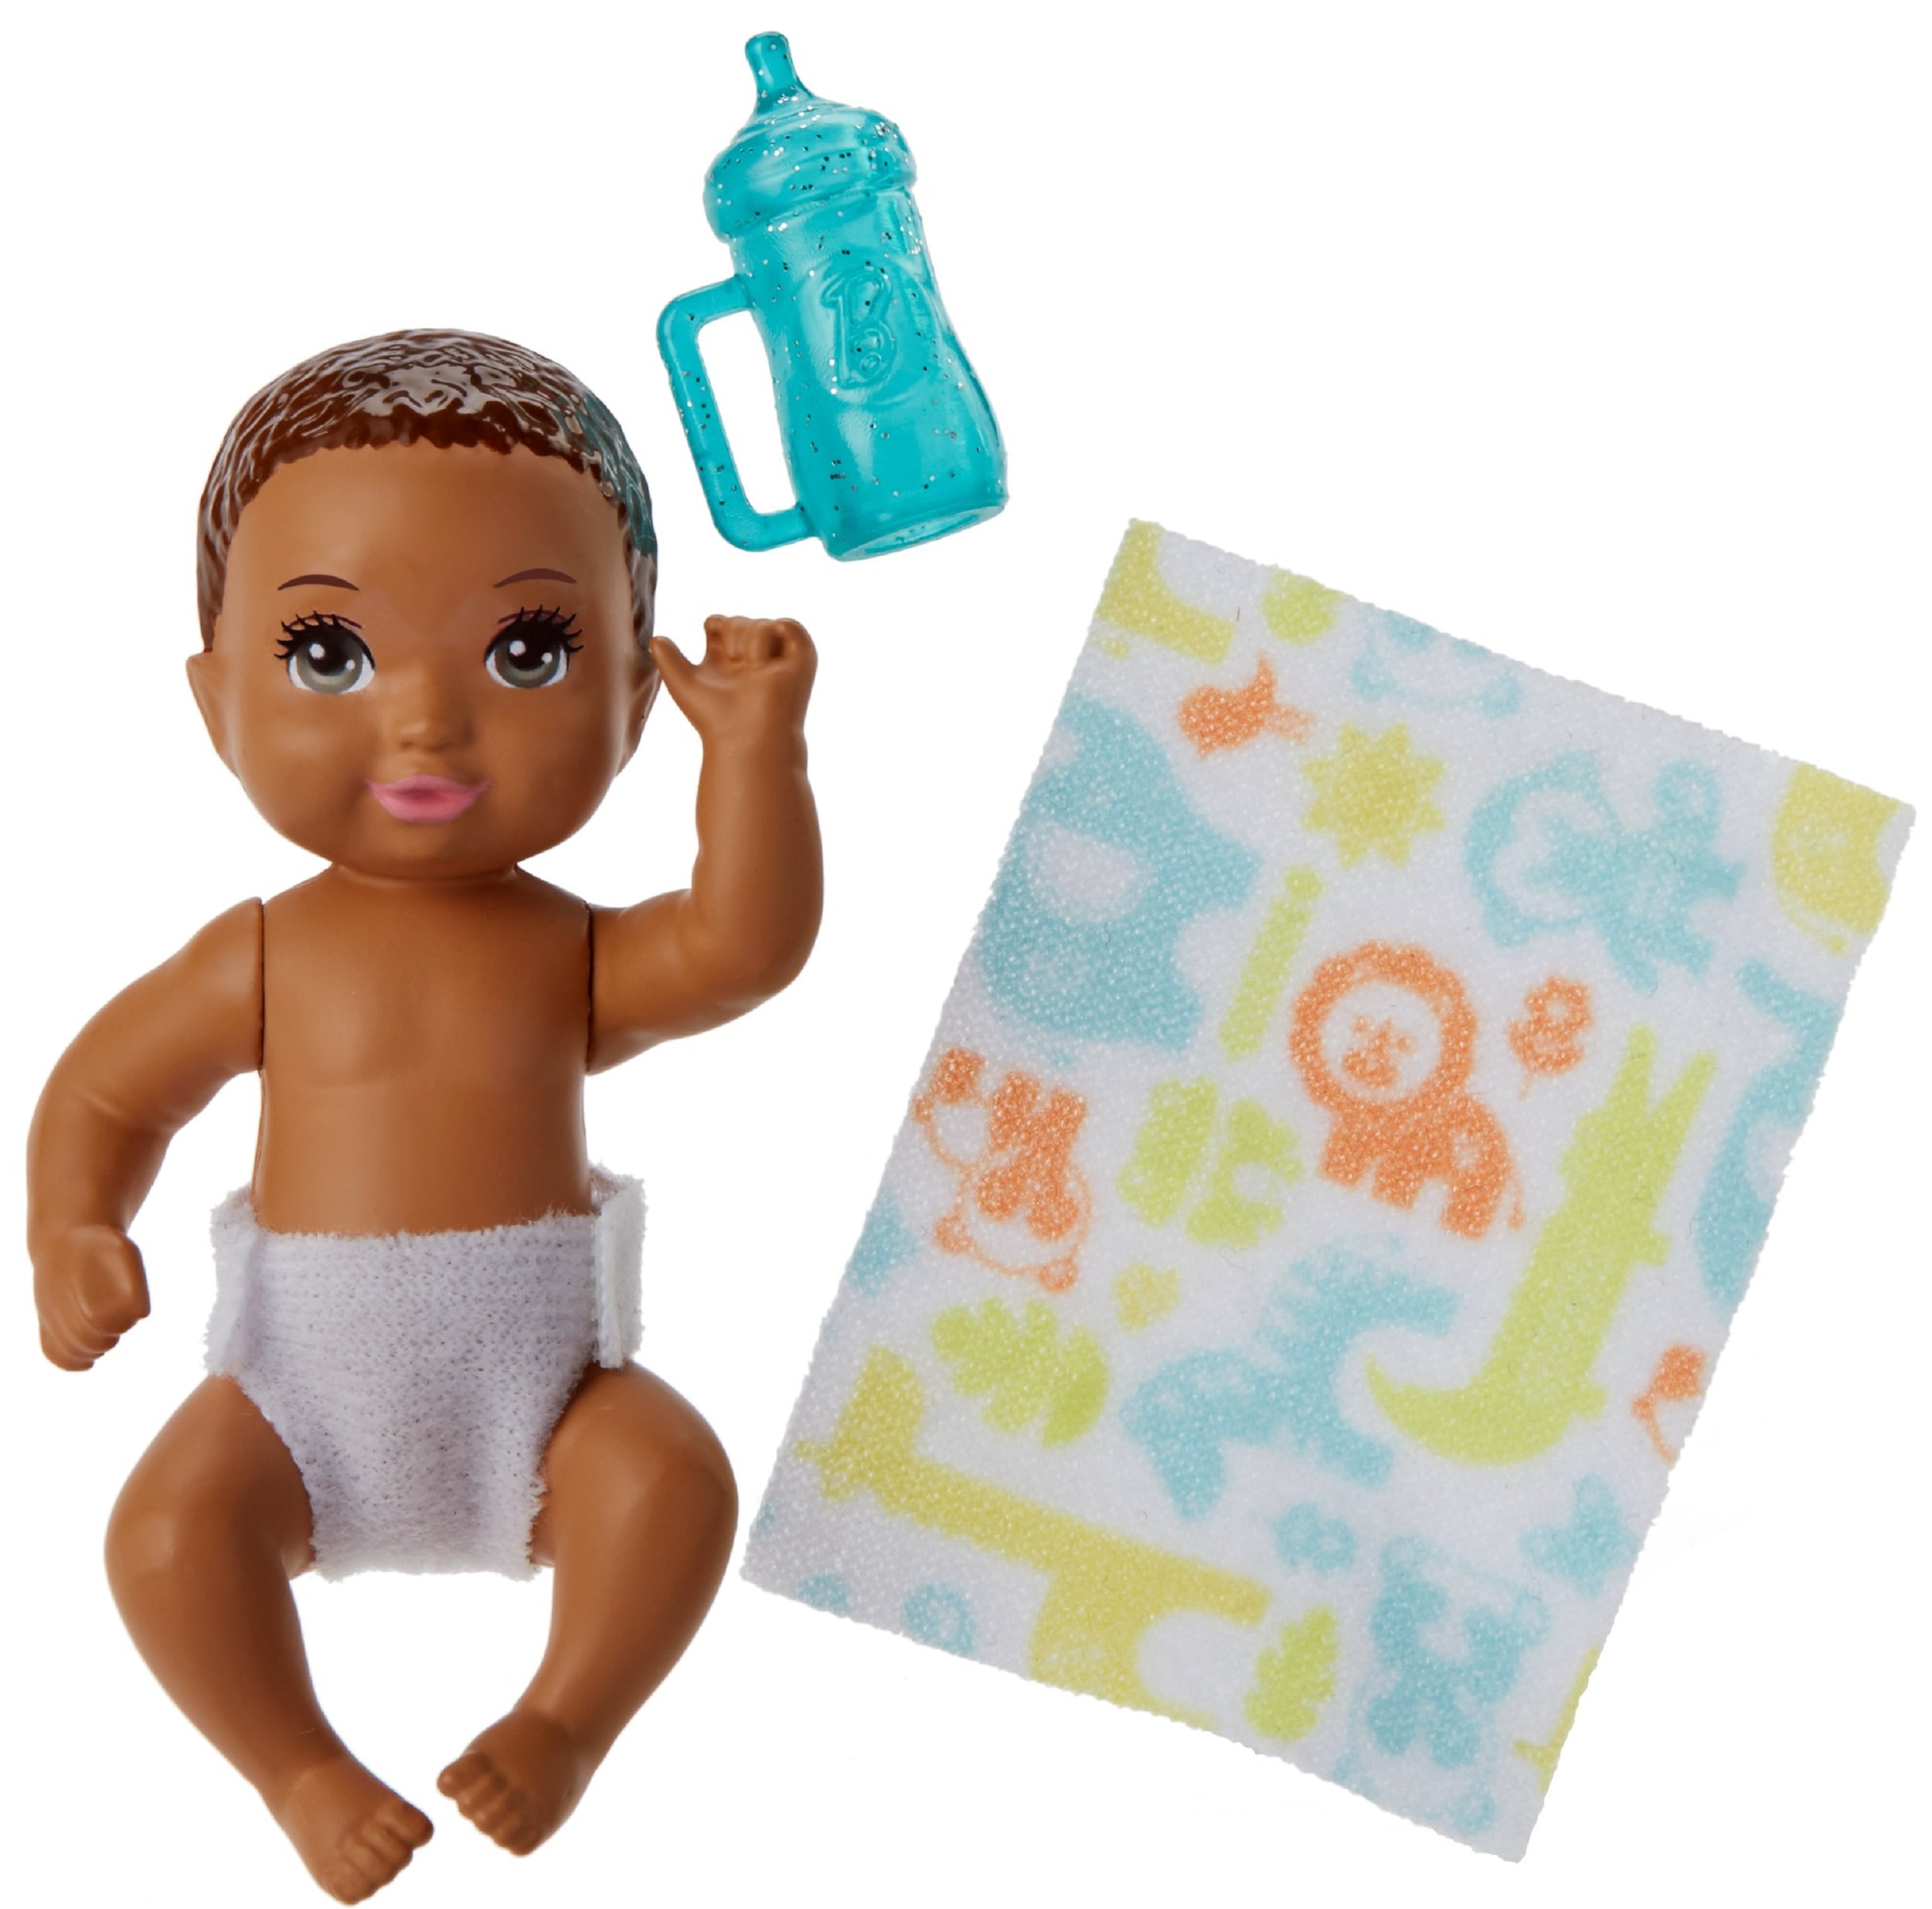 Details about   NEW Barbie Skipper Babysitter Doll Baby Bath Time Bathtub Play Set Soap Bottle 